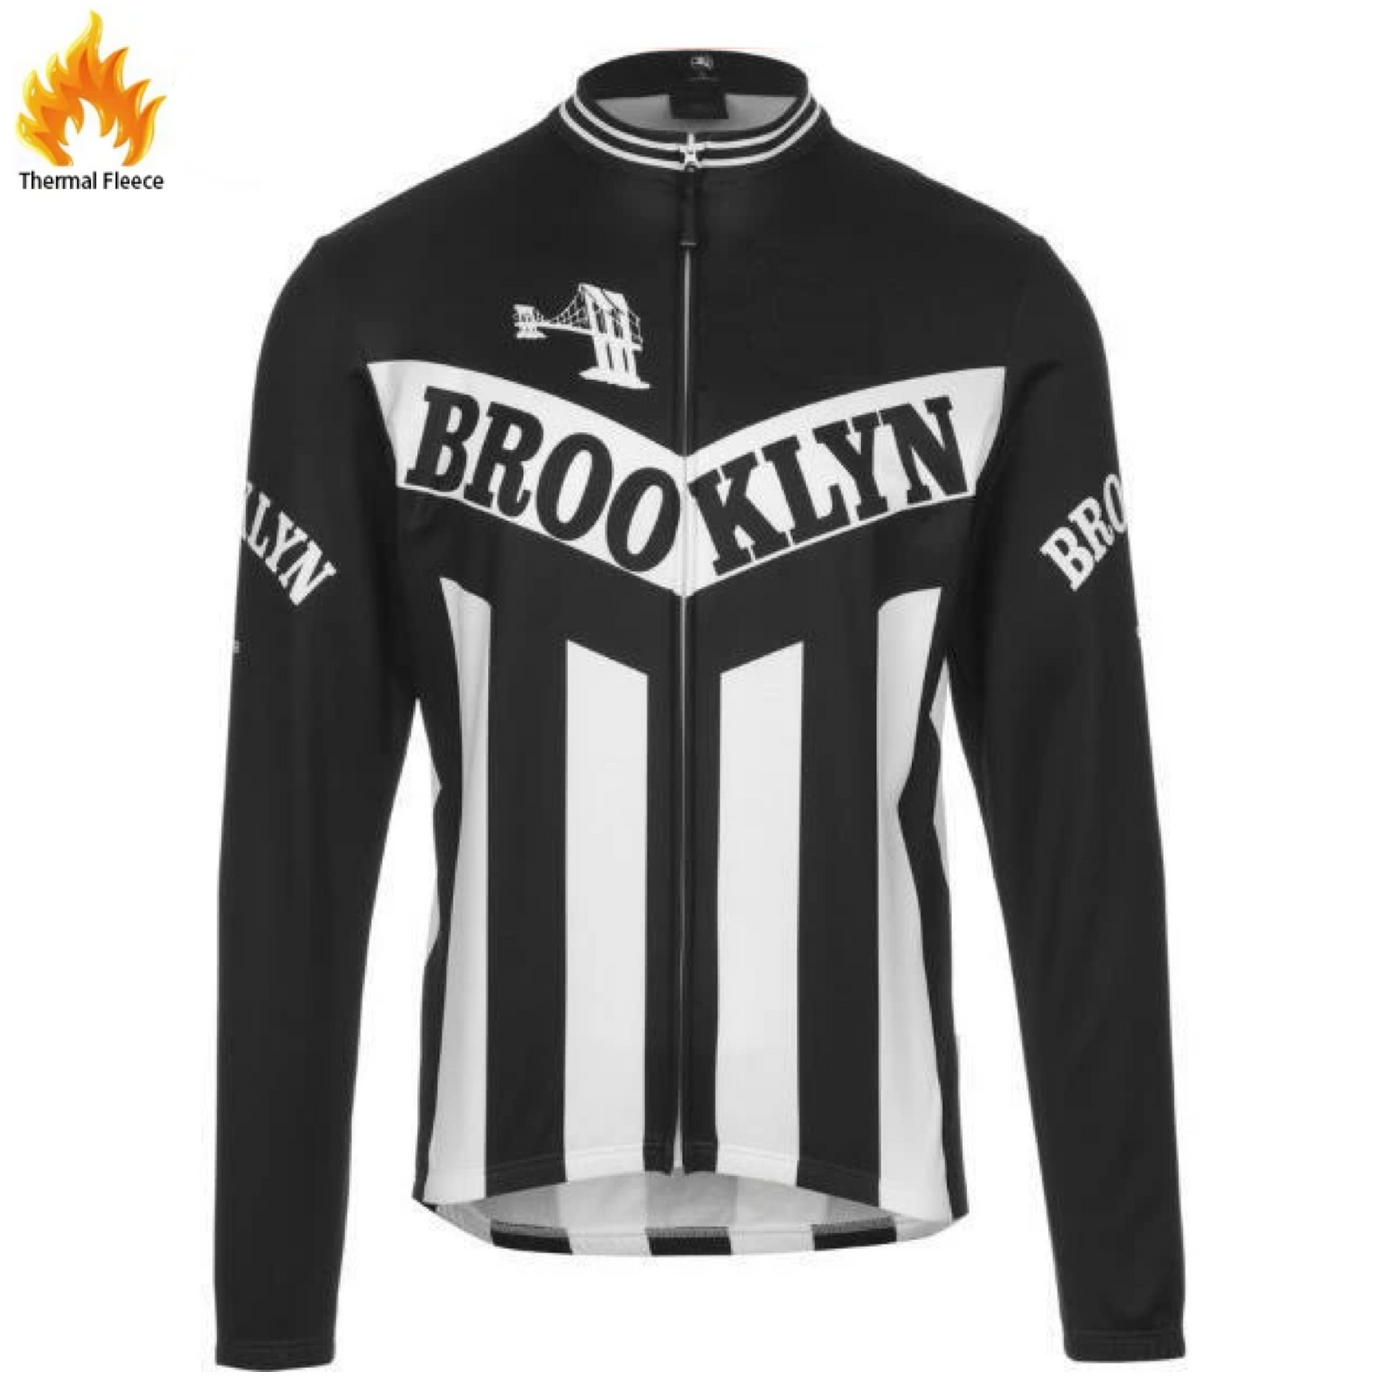 Pro Team Jacket Brooklyn Black